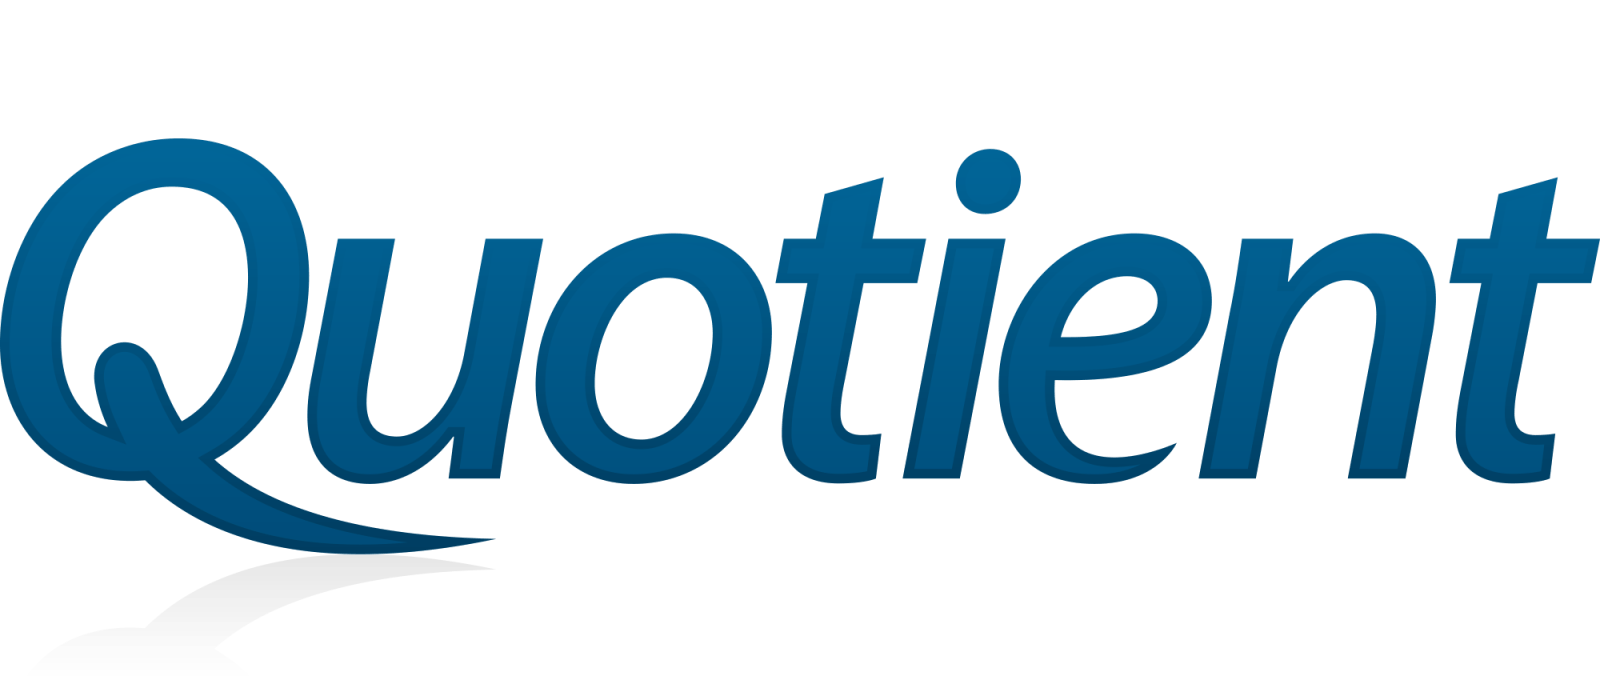 Quotient Logo - Ecosystem partner of the month: Quotient | Xero Blog